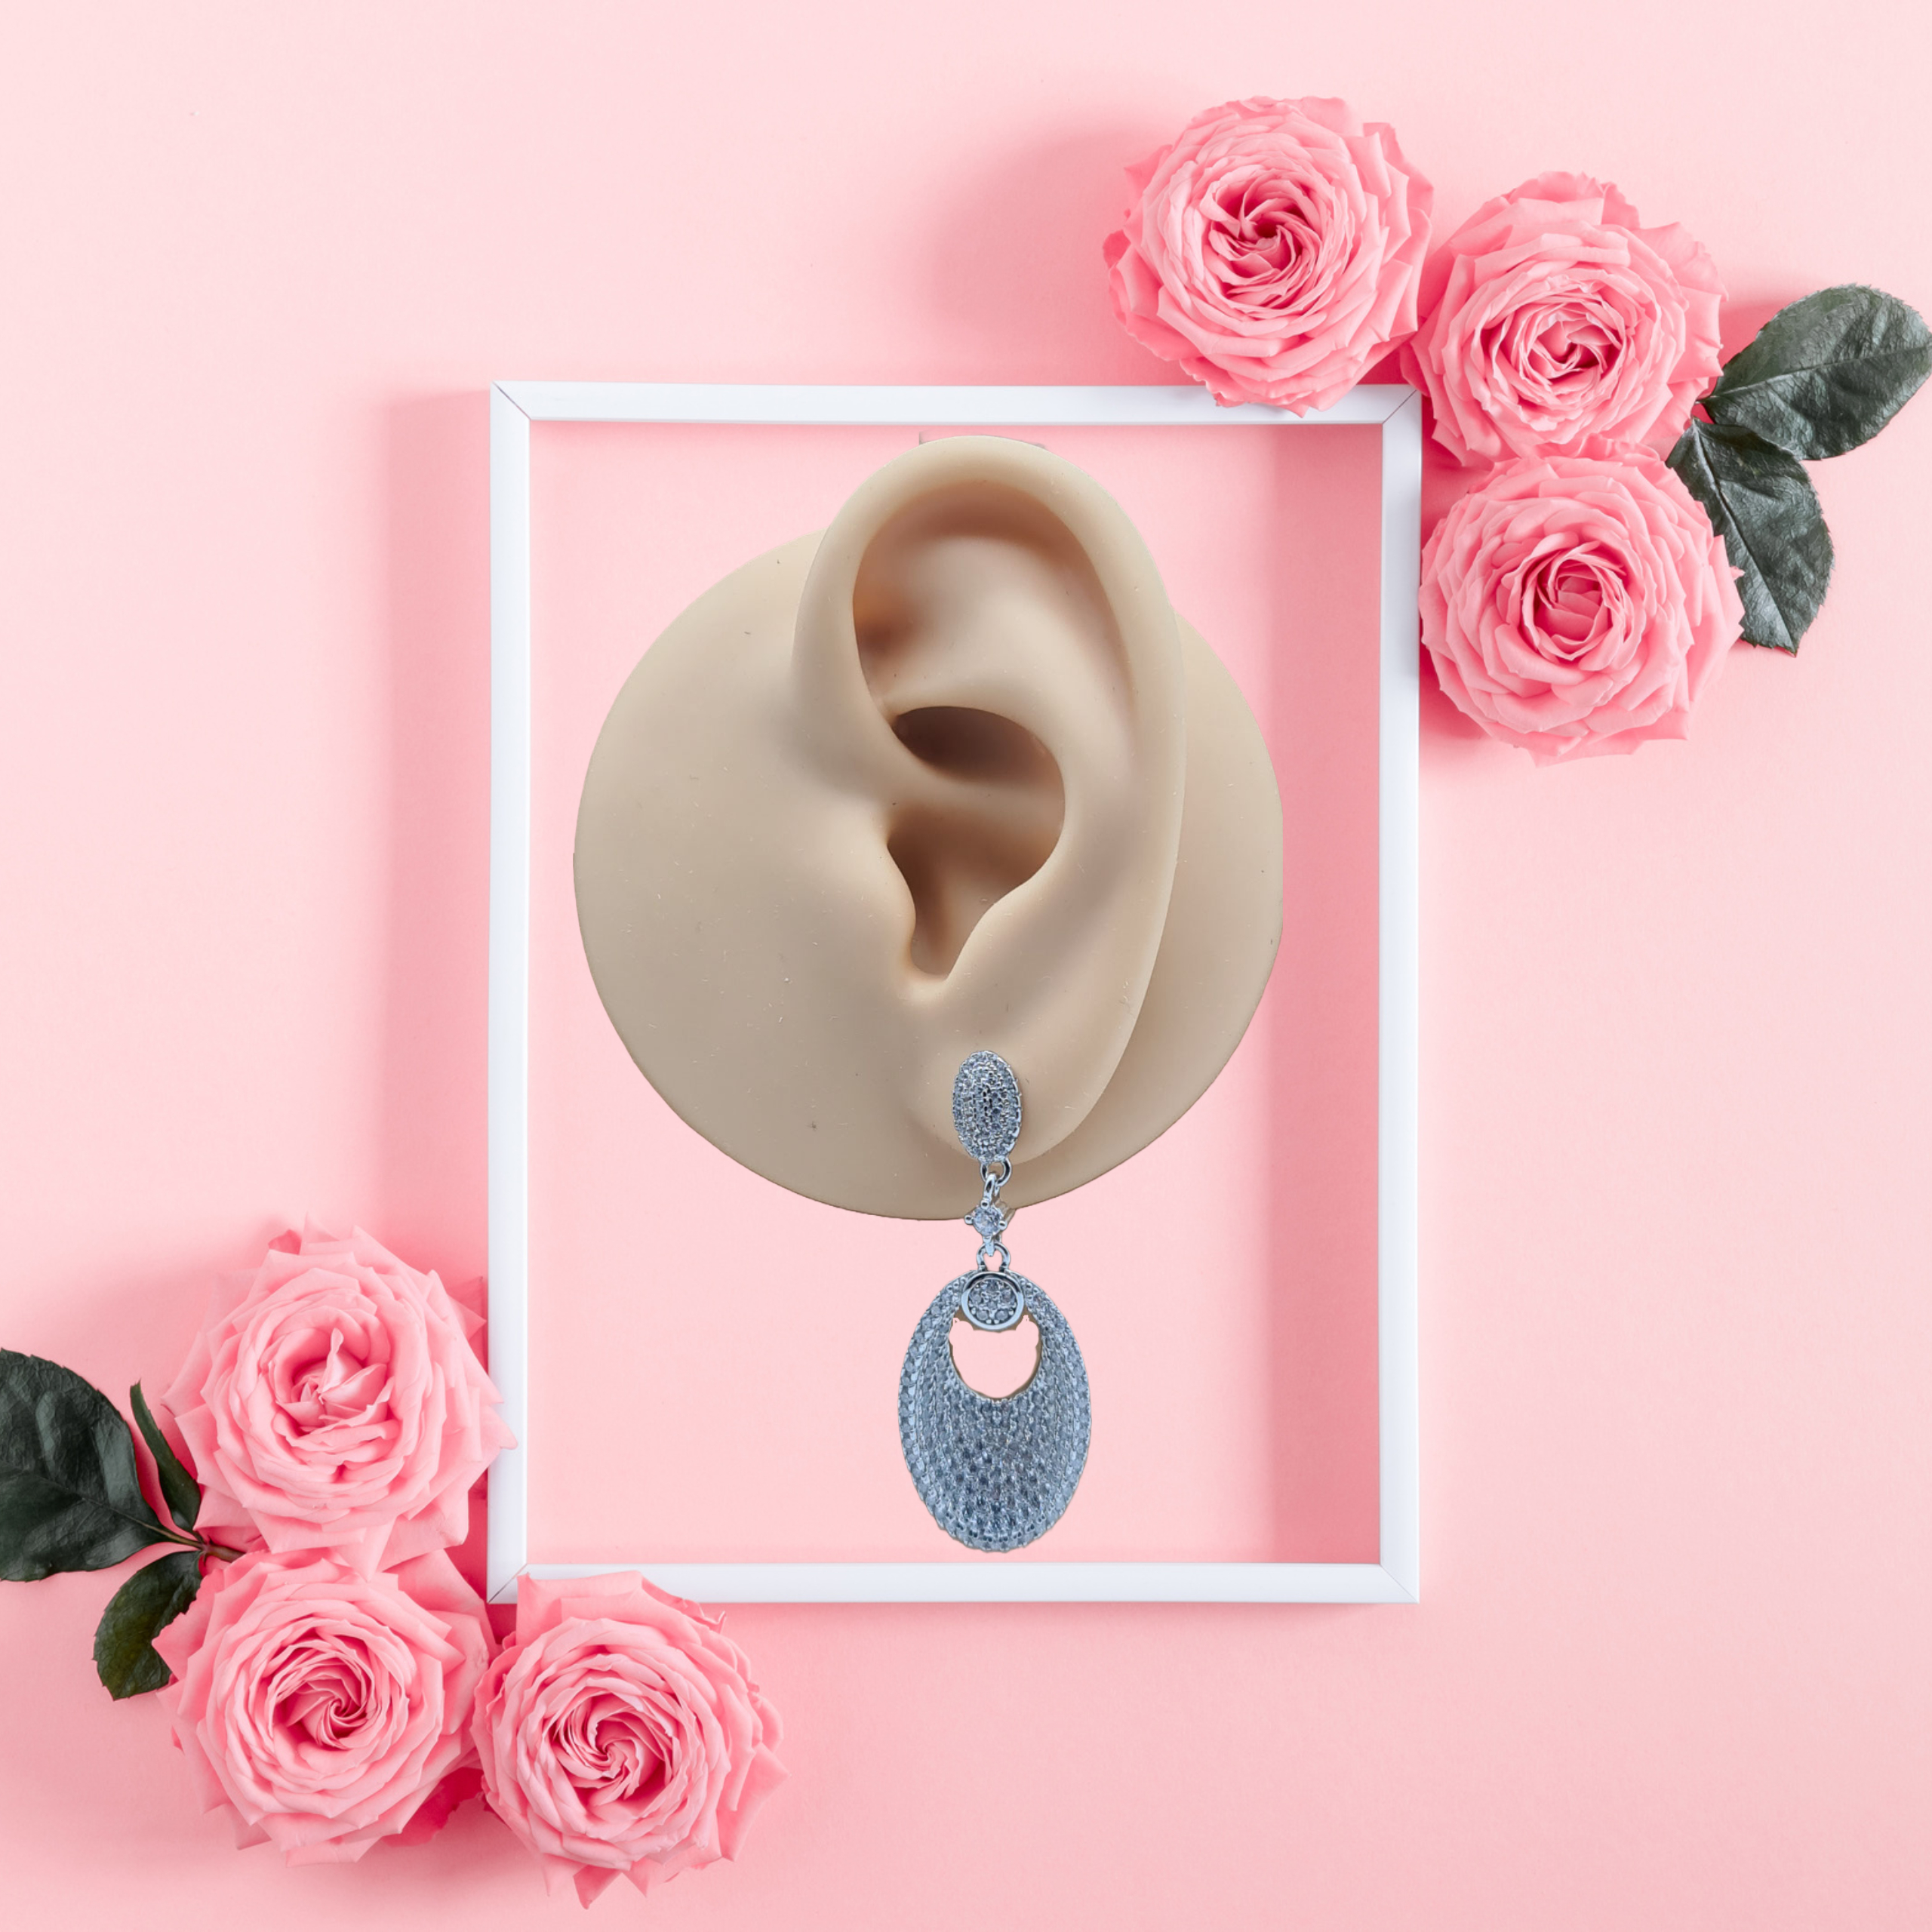 Rhodium Plated Oval Drop Earrings